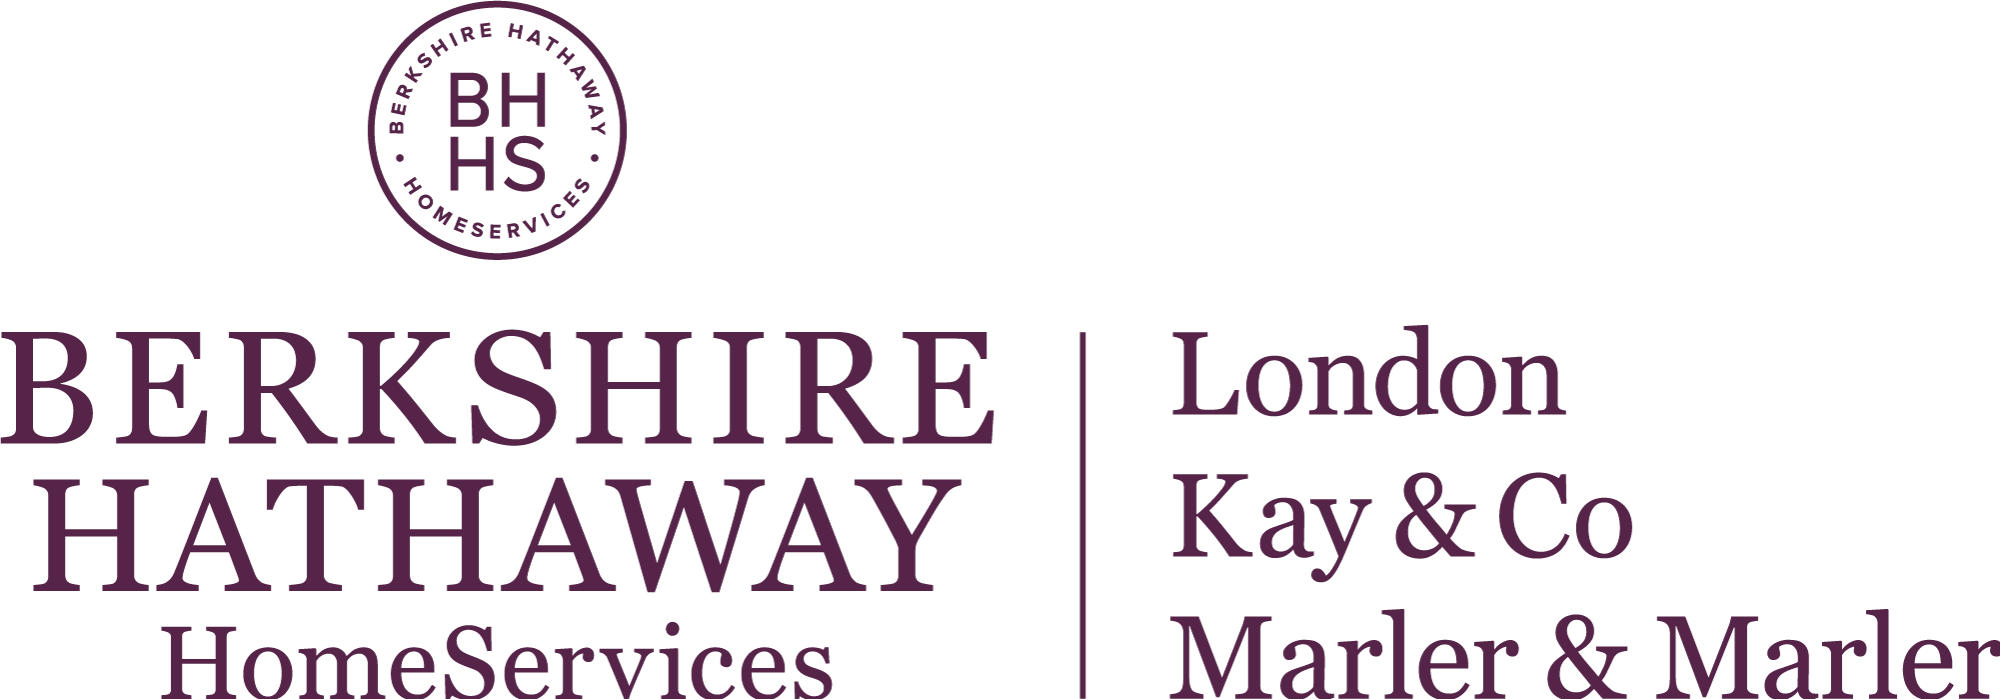 Hyde Park Estate Agents - Berkshire Hathaway HomeServices London Kay & Co logo